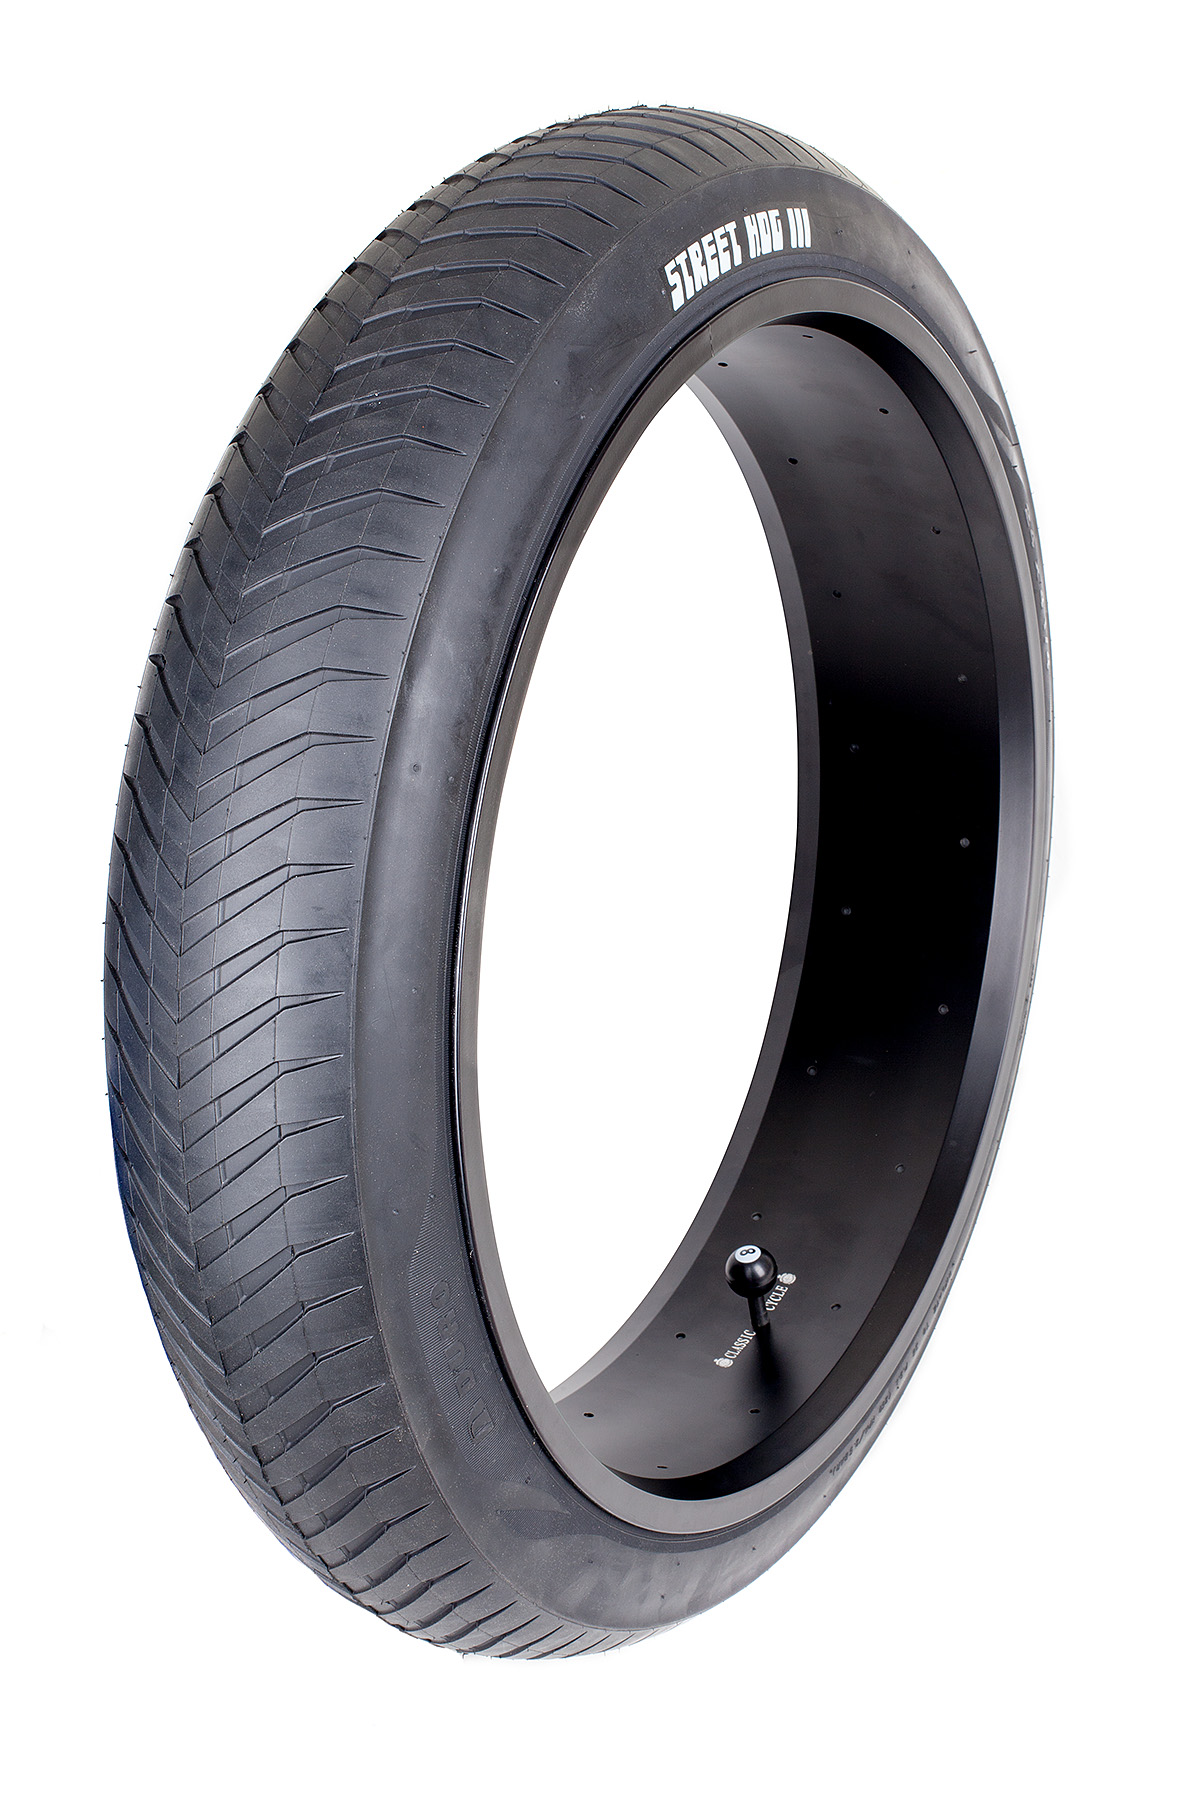 Street Hog III Monster Tire 24 x 4 1/4 inch pure black